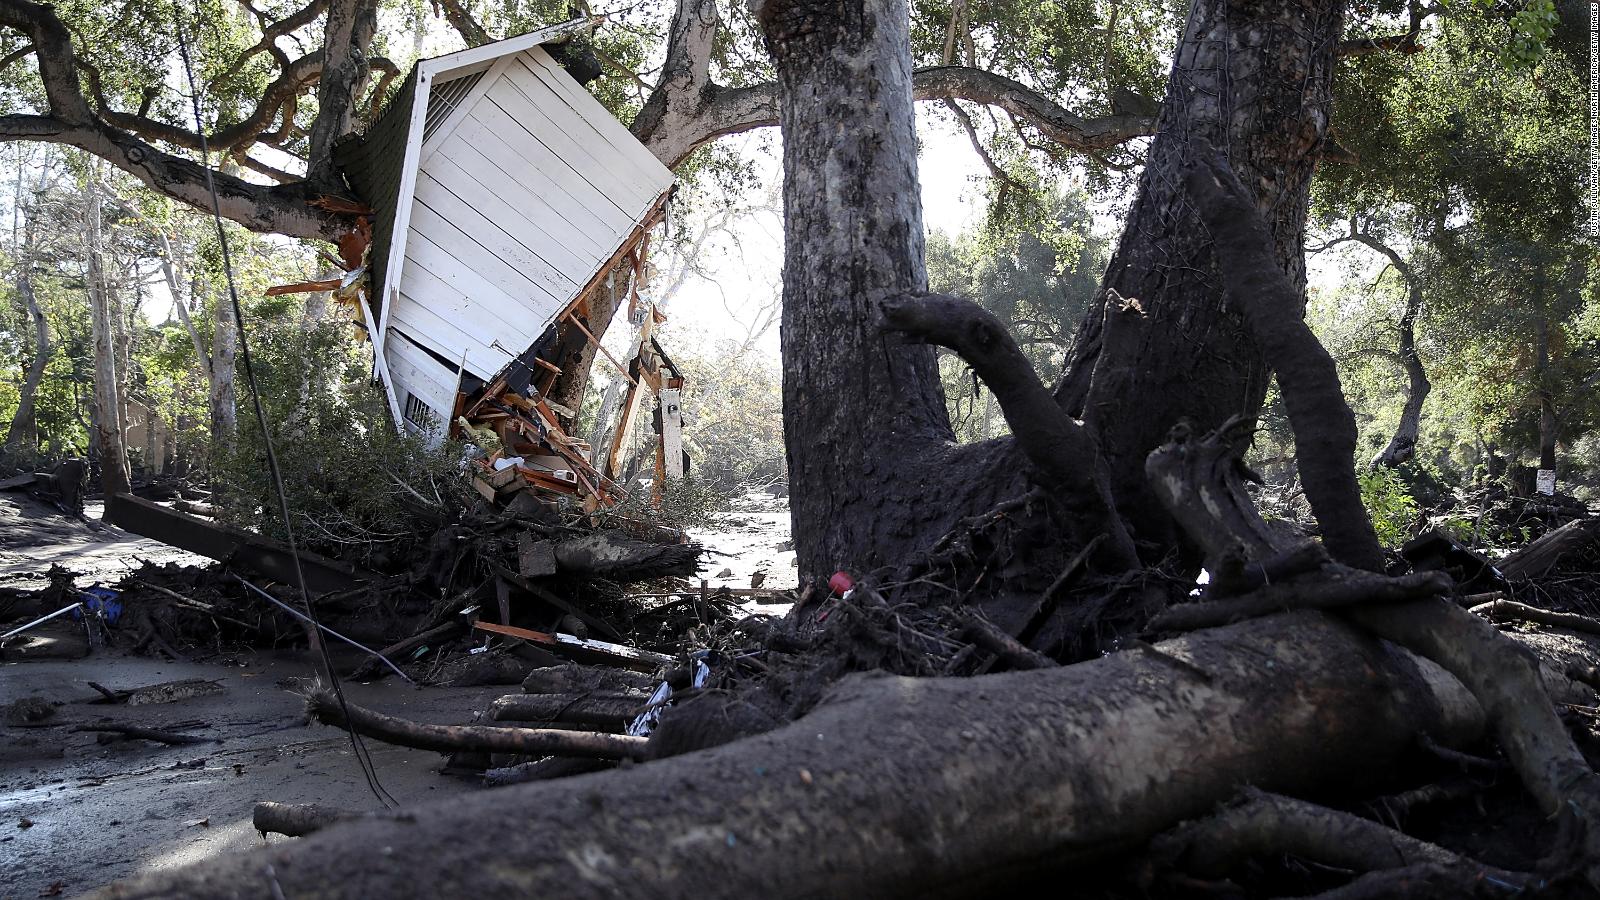 Santa Barbara evacuations Orders lifted, people can return home after